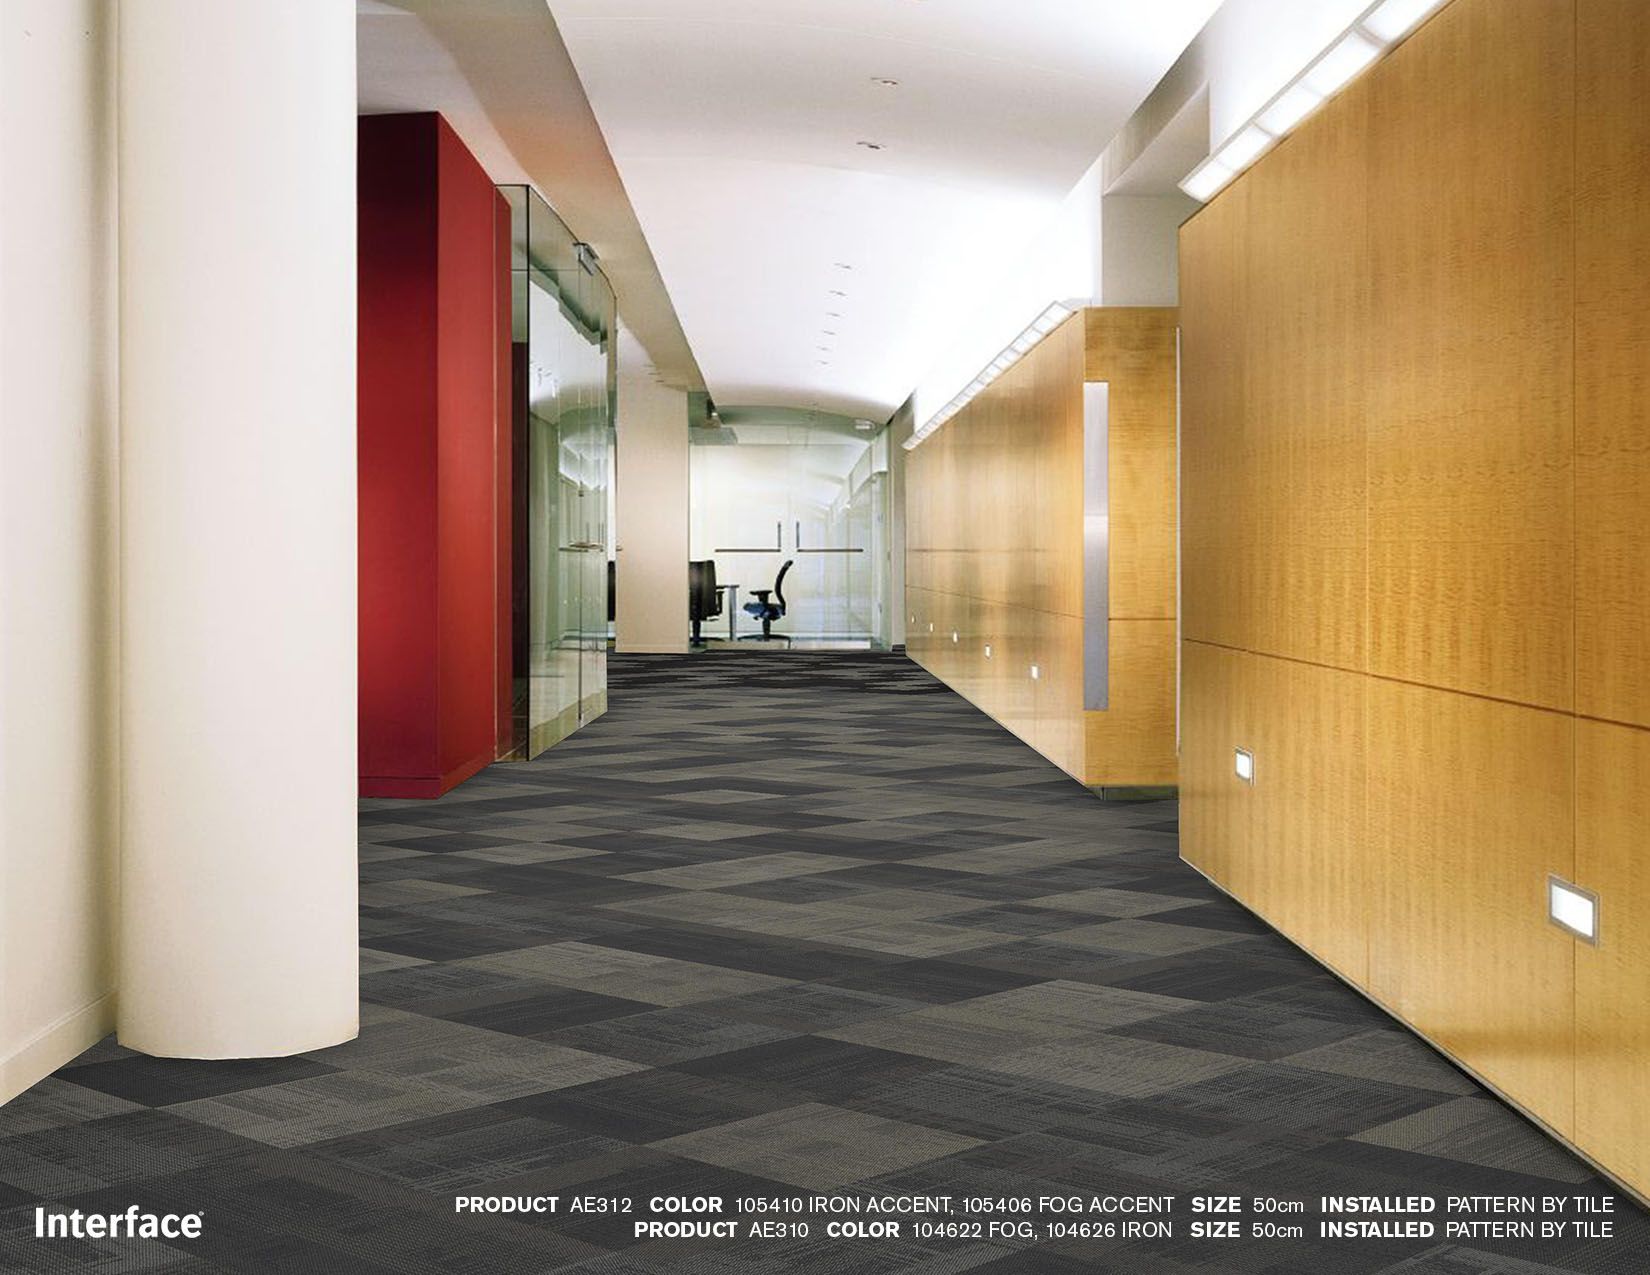 Interface SR899 and AE312 carpet tile in hallway scene numéro d’image 5